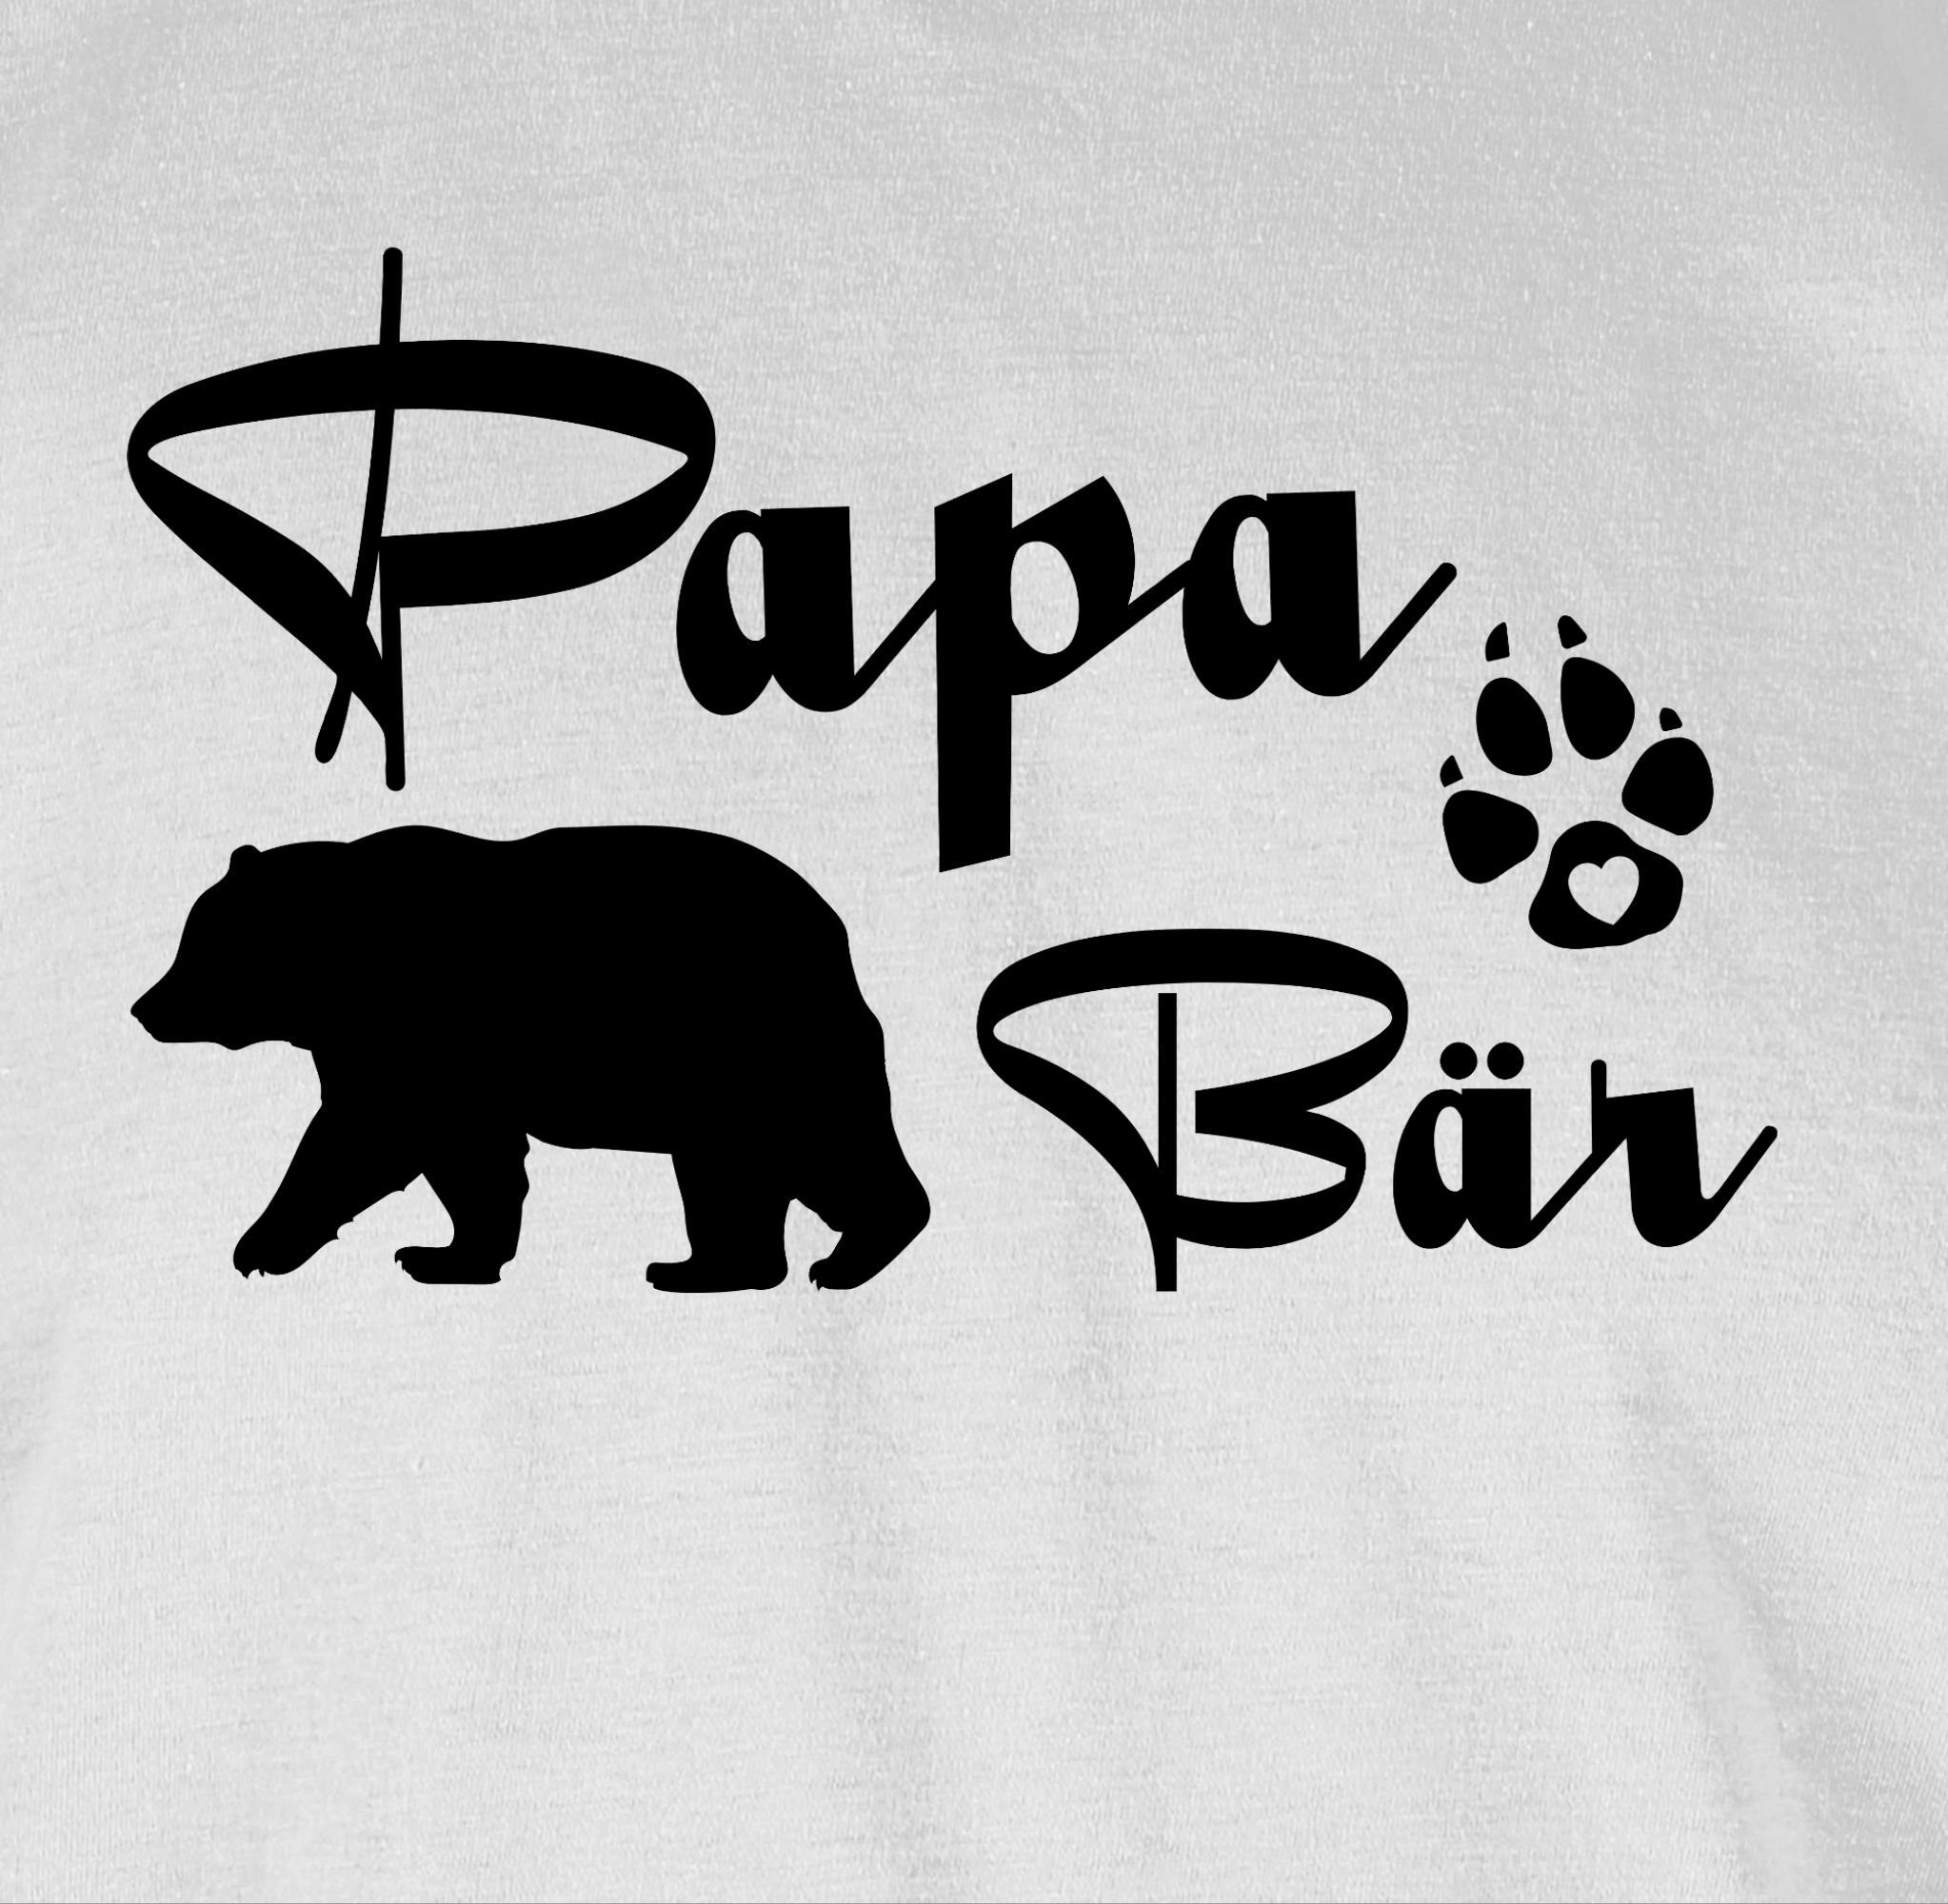 Shirtracer T-Shirt Papa Weiß Bär Geschenk Vatertag Papa Lettering 03 für